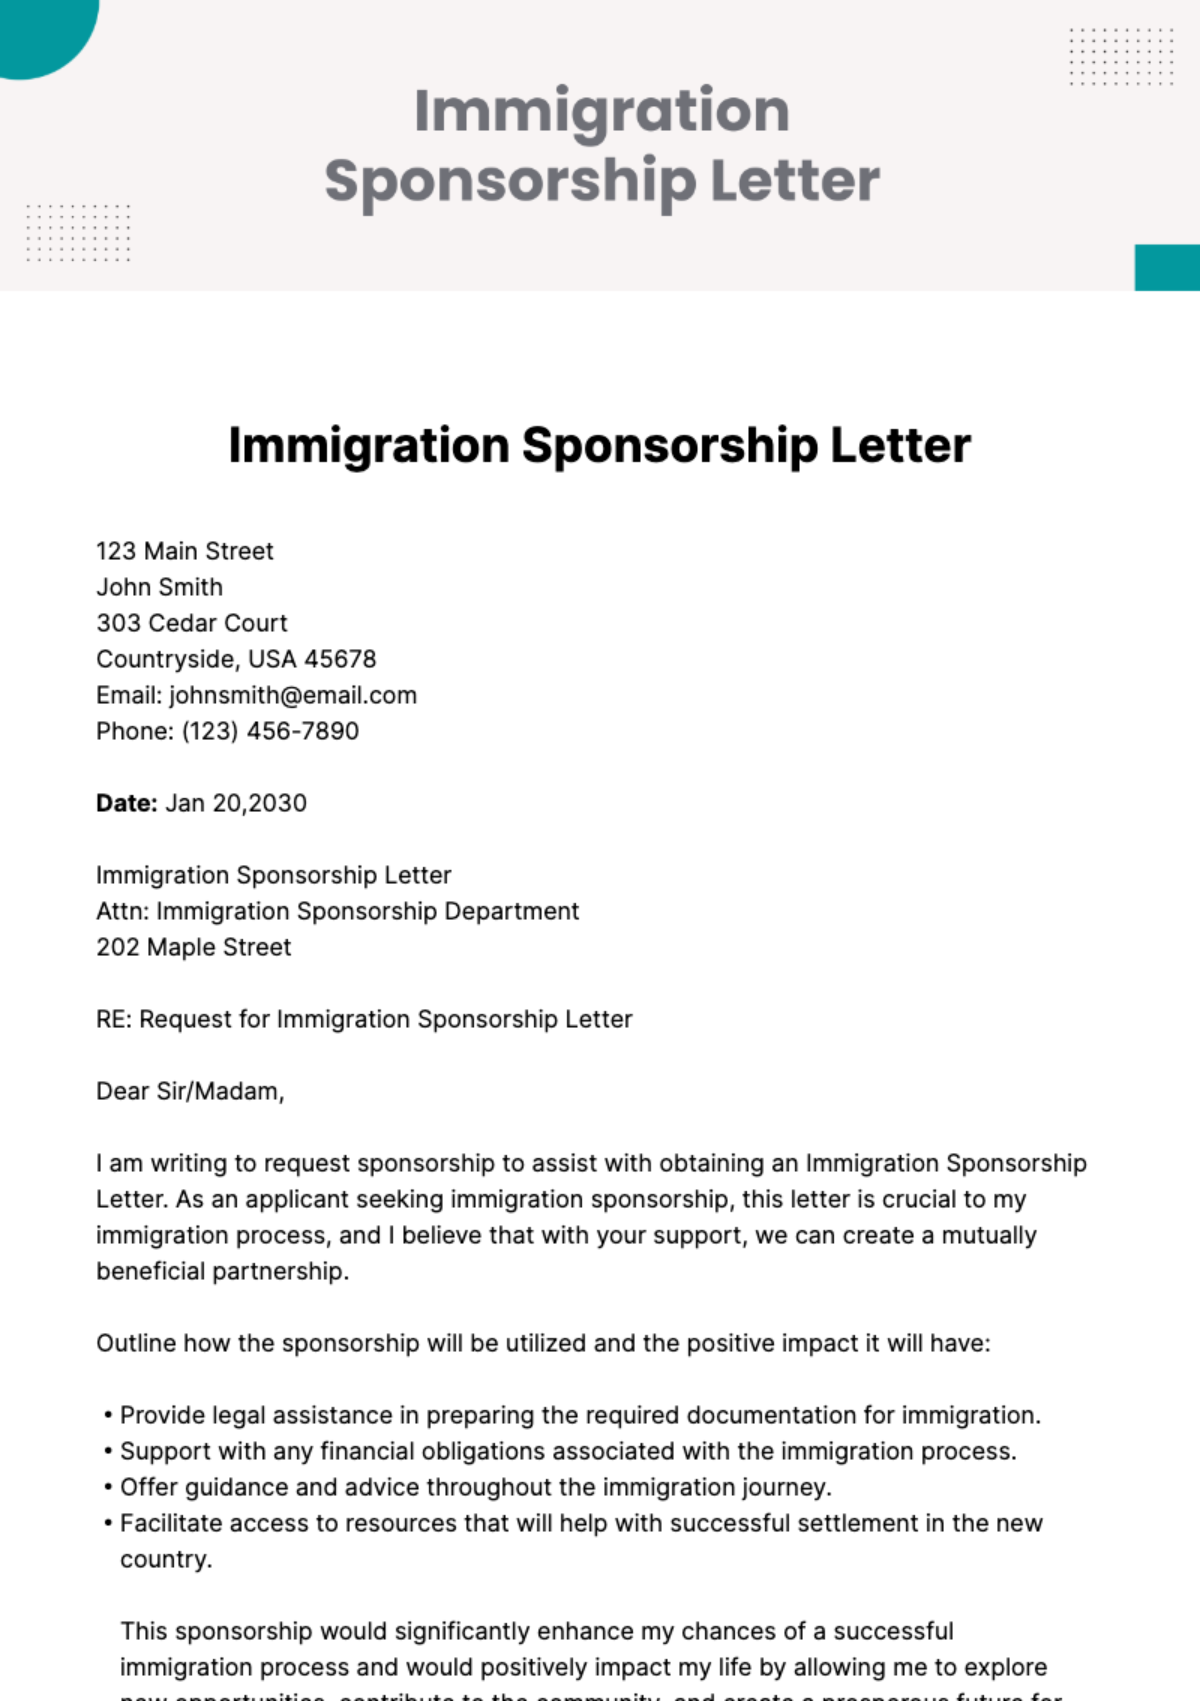 Free Immigration Sponsorship Letter Template